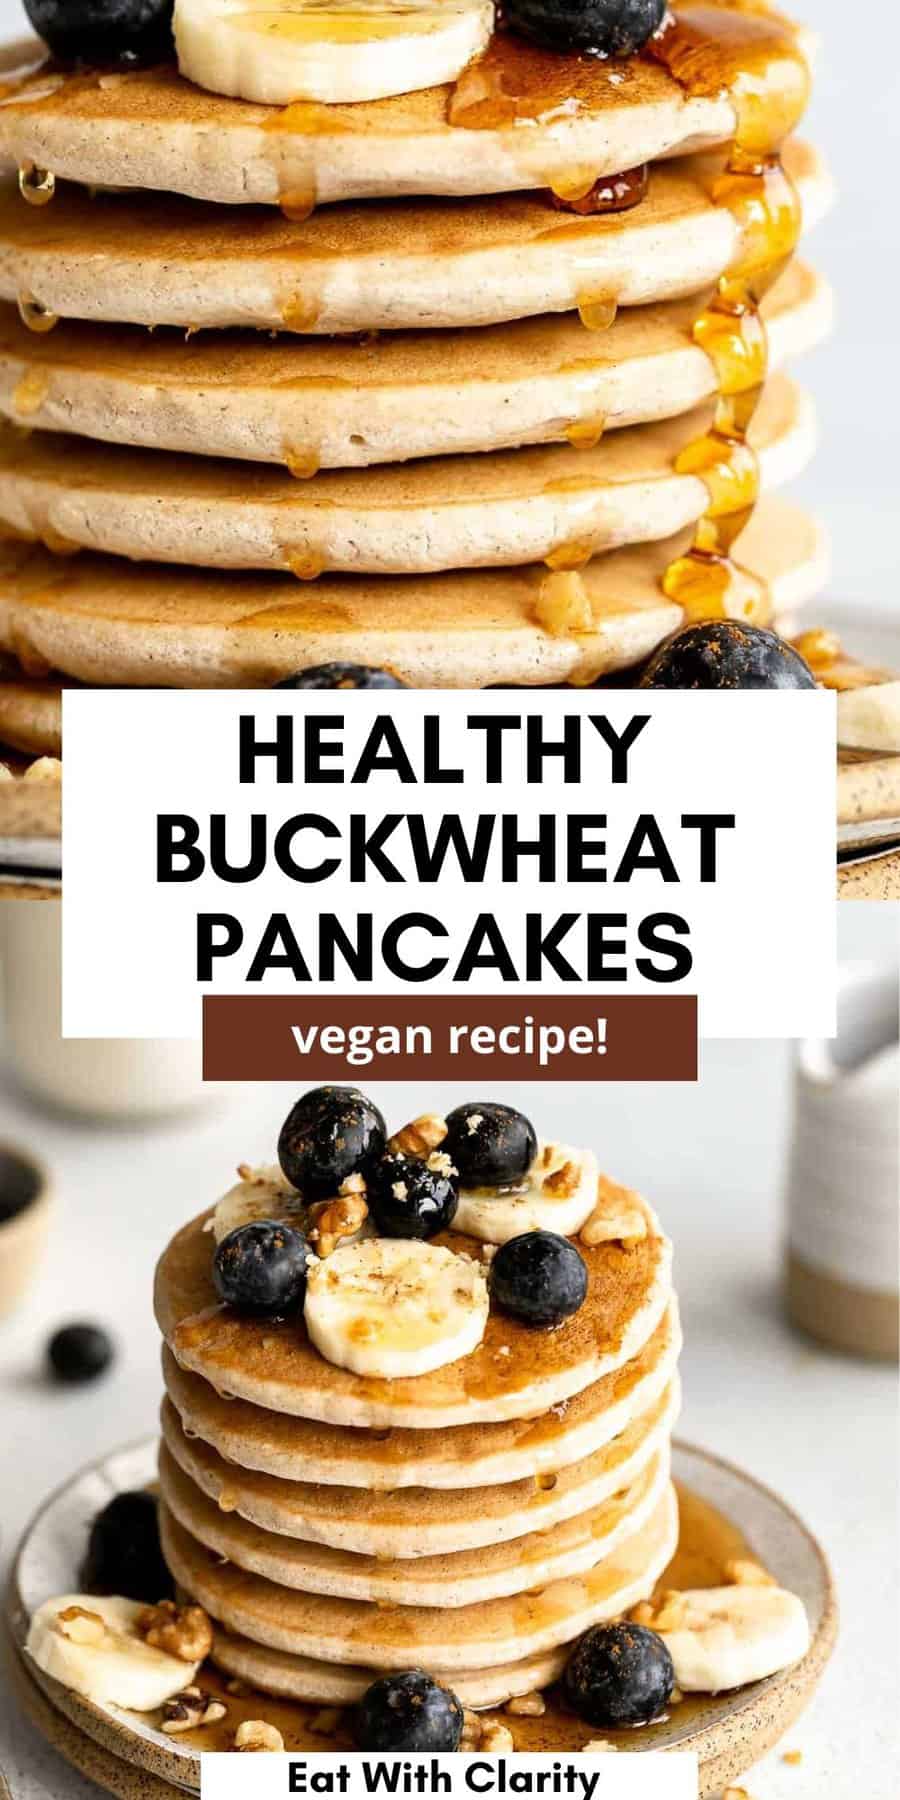 Vegan Buckwheat Pancakes - Eat With Clarity